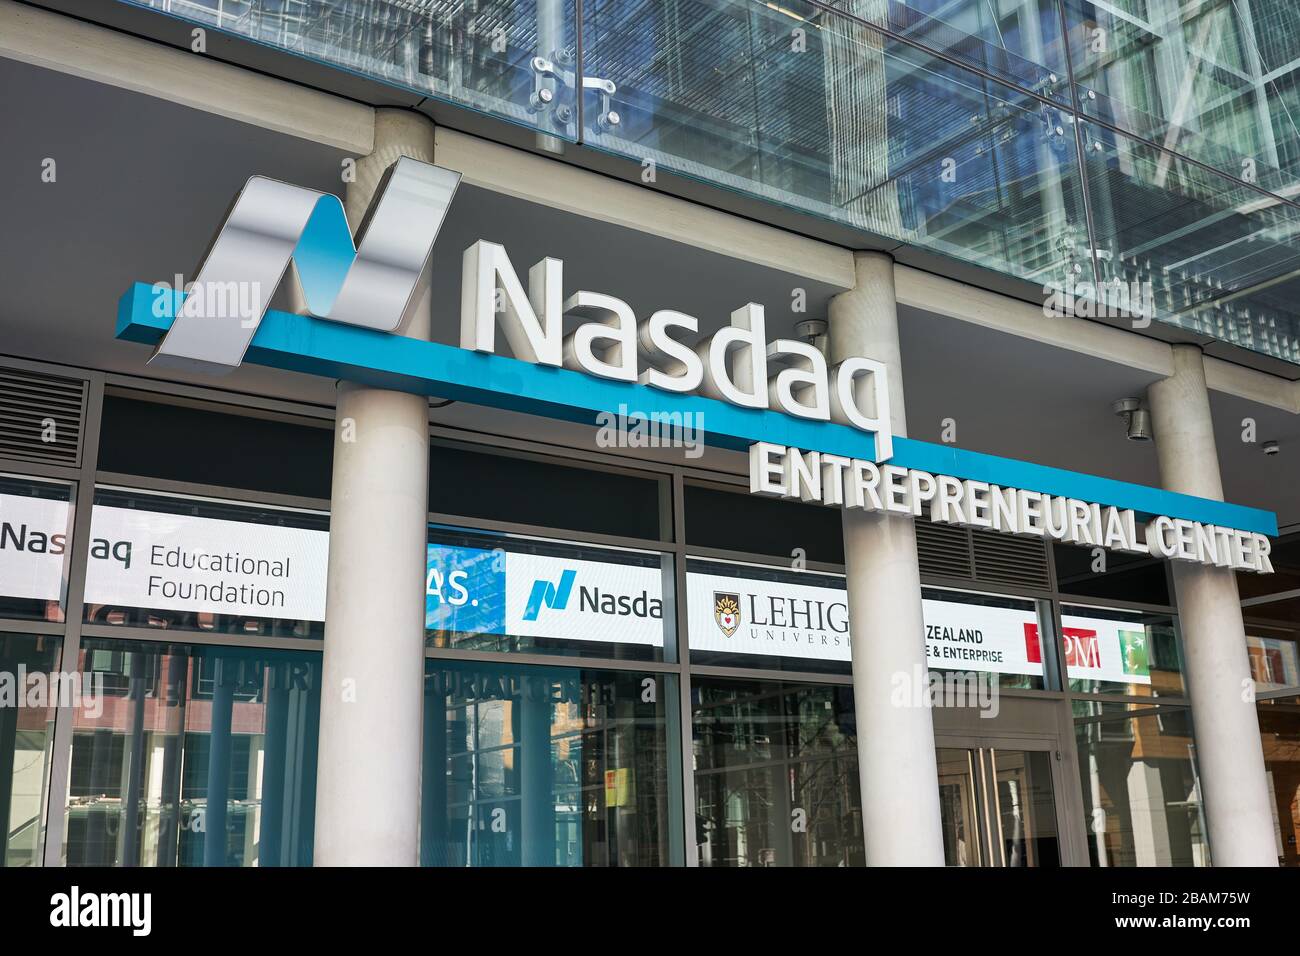 The Nasdaq Entrepreneurial Center in San Francisco, California, seen on Saturday, Feb 8, 2020. Stock Photo